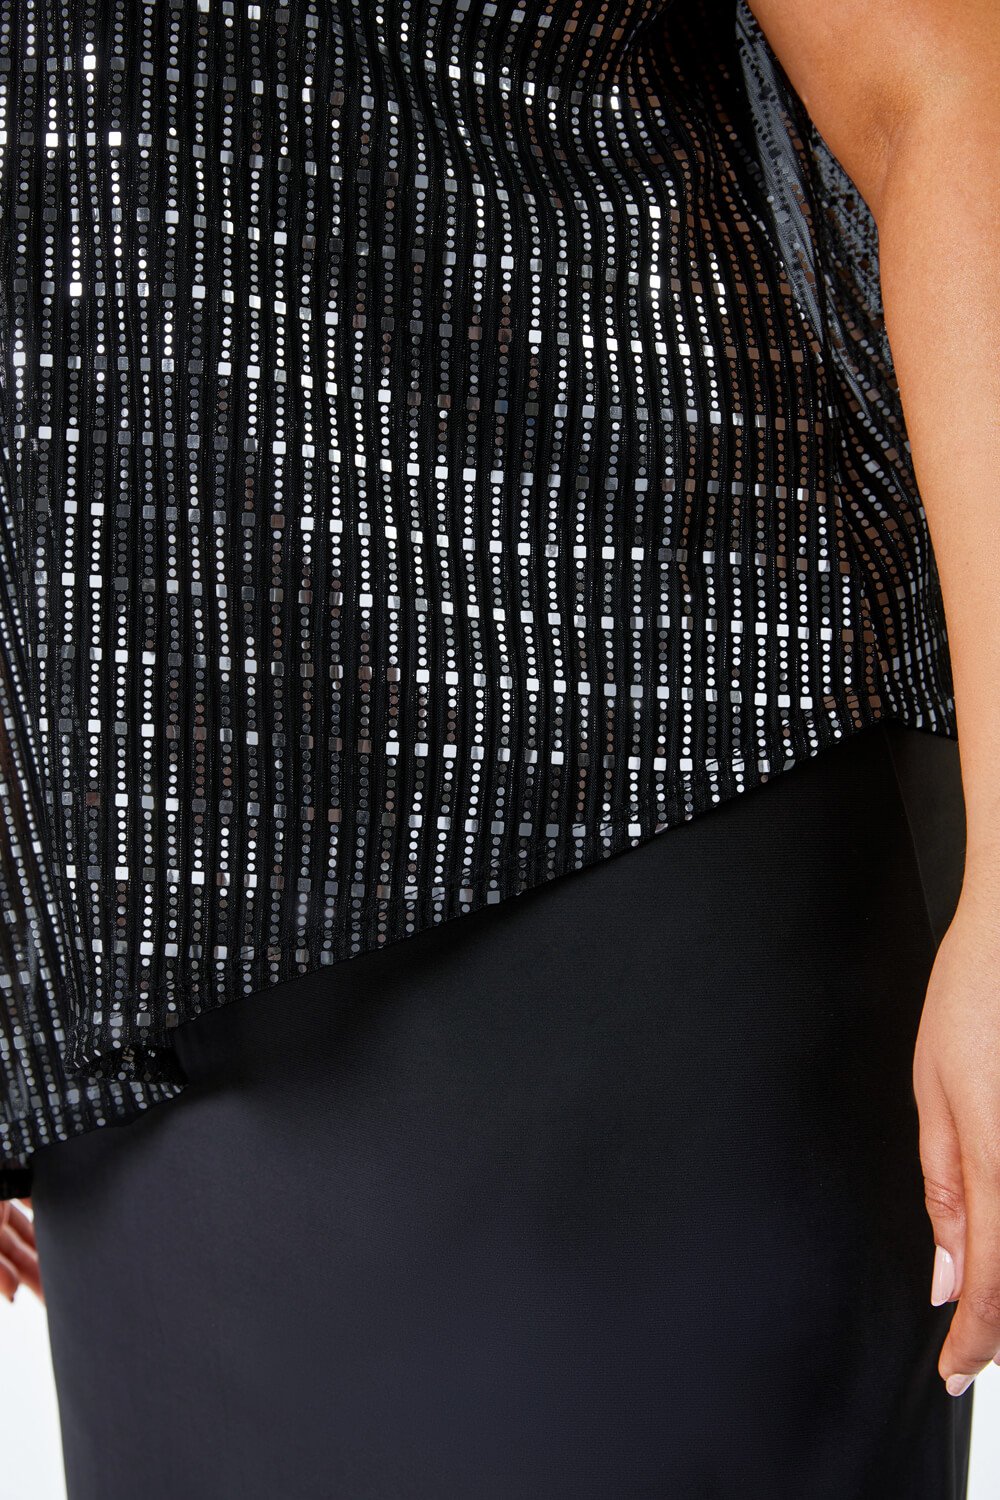 Black Curve Asymmetric Shimmer Overlay Dress, Image 5 of 5